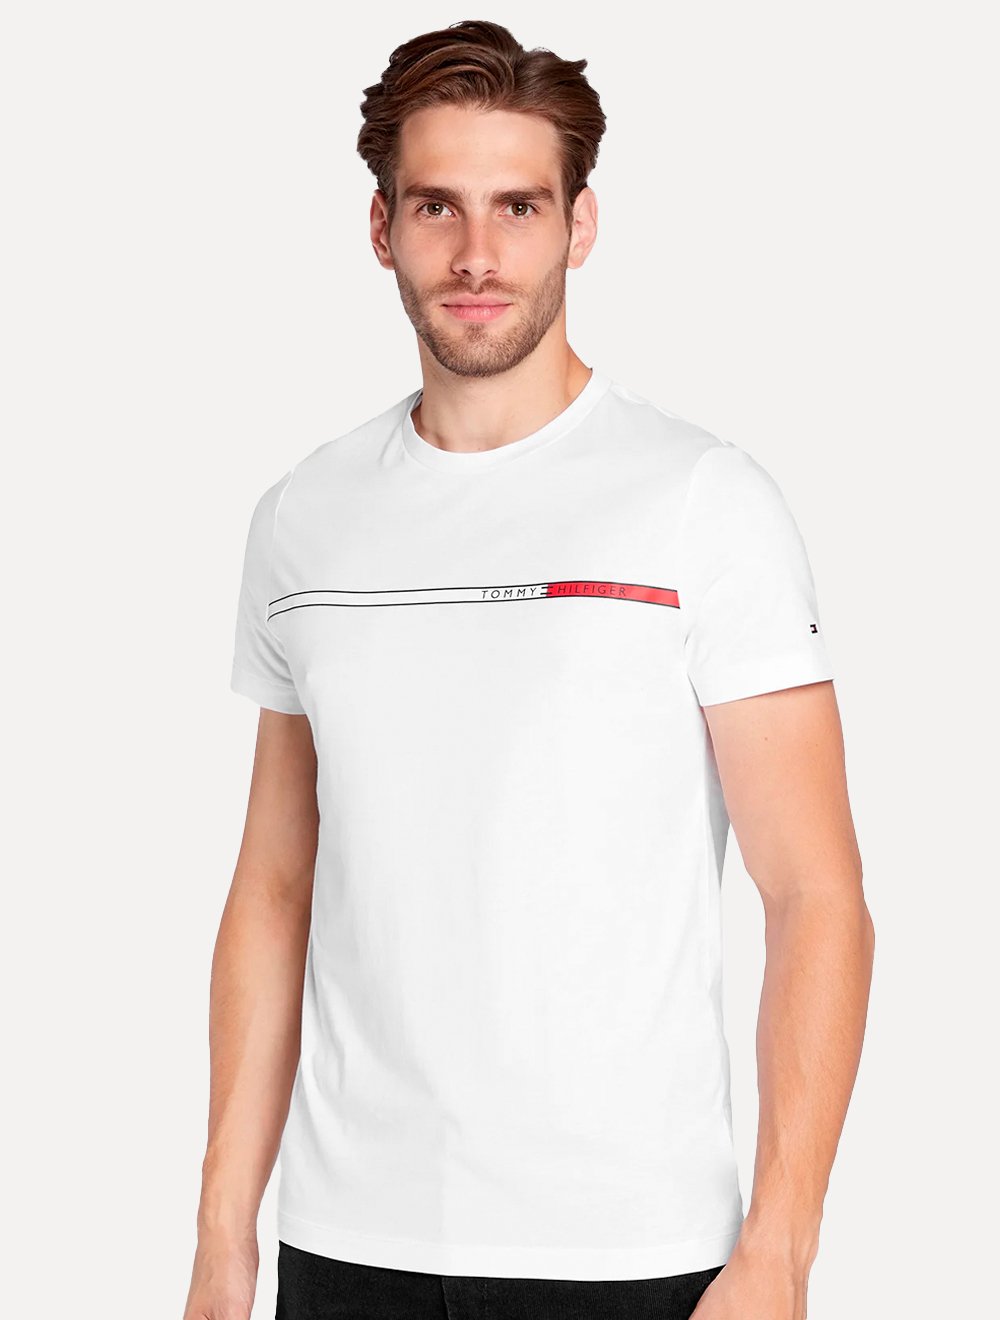 Camiseta Tommy Hilfiger Modern Off White - KS MULTIMARCAS